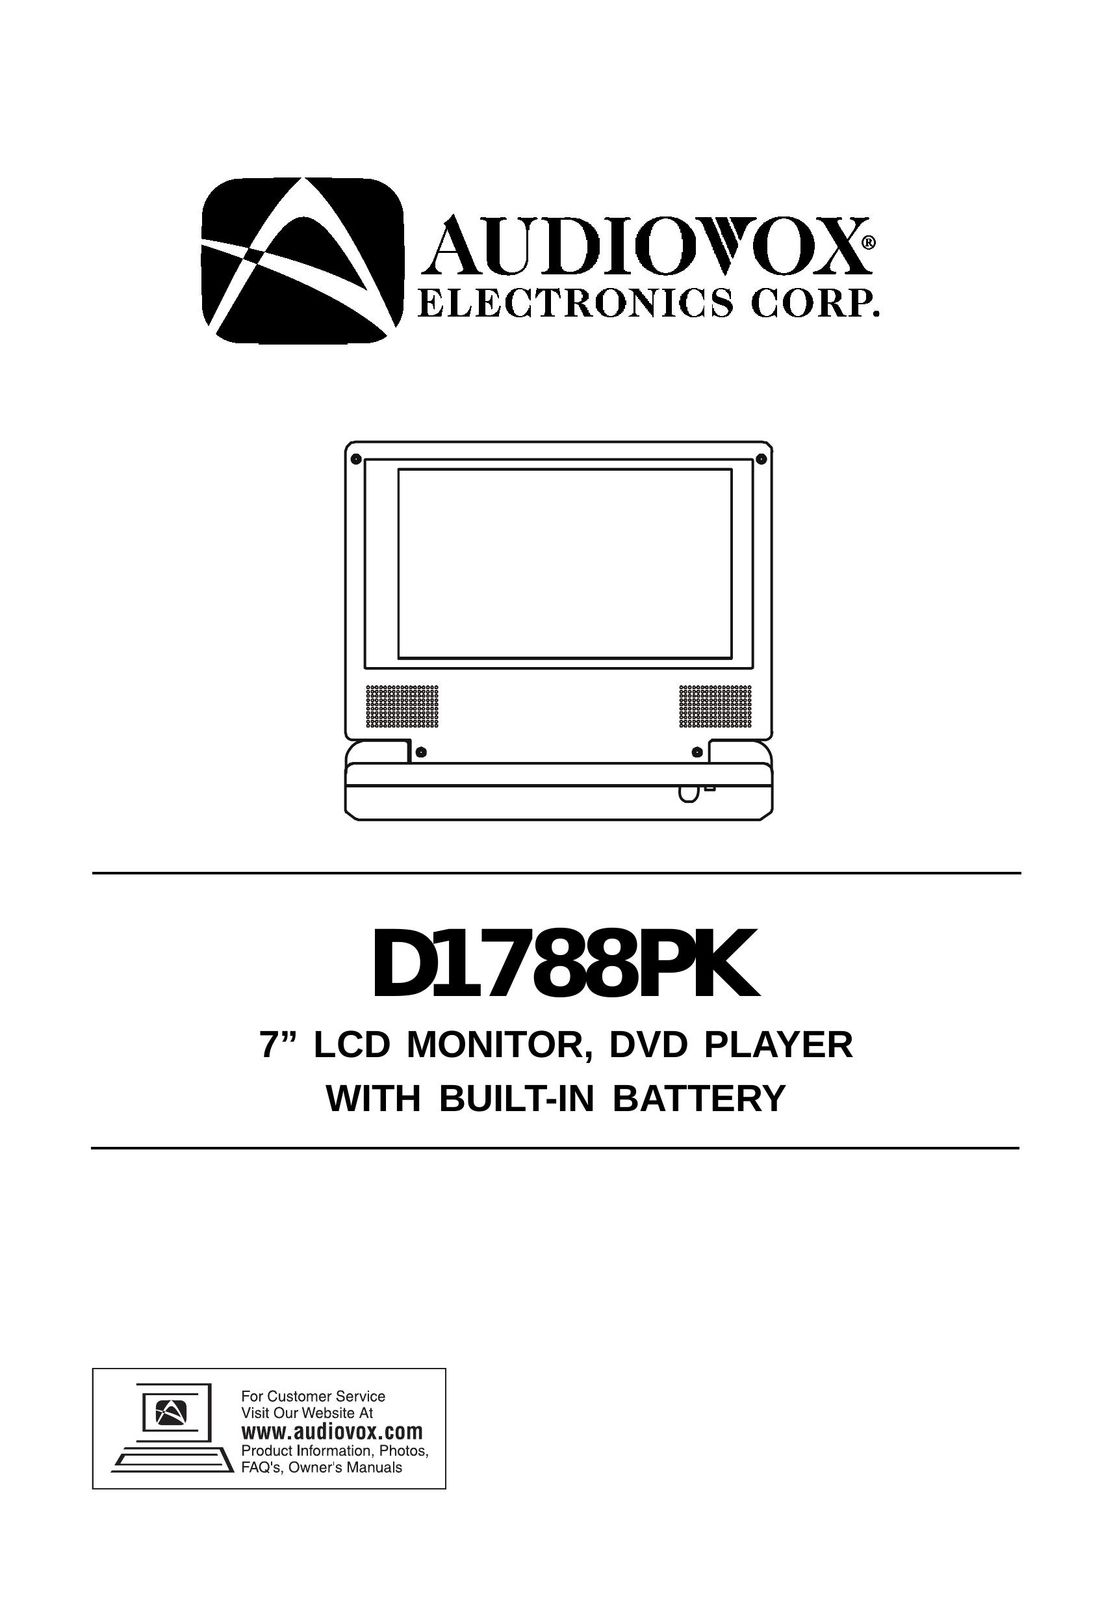 Audiovox D1788PK Car Video System User Manual